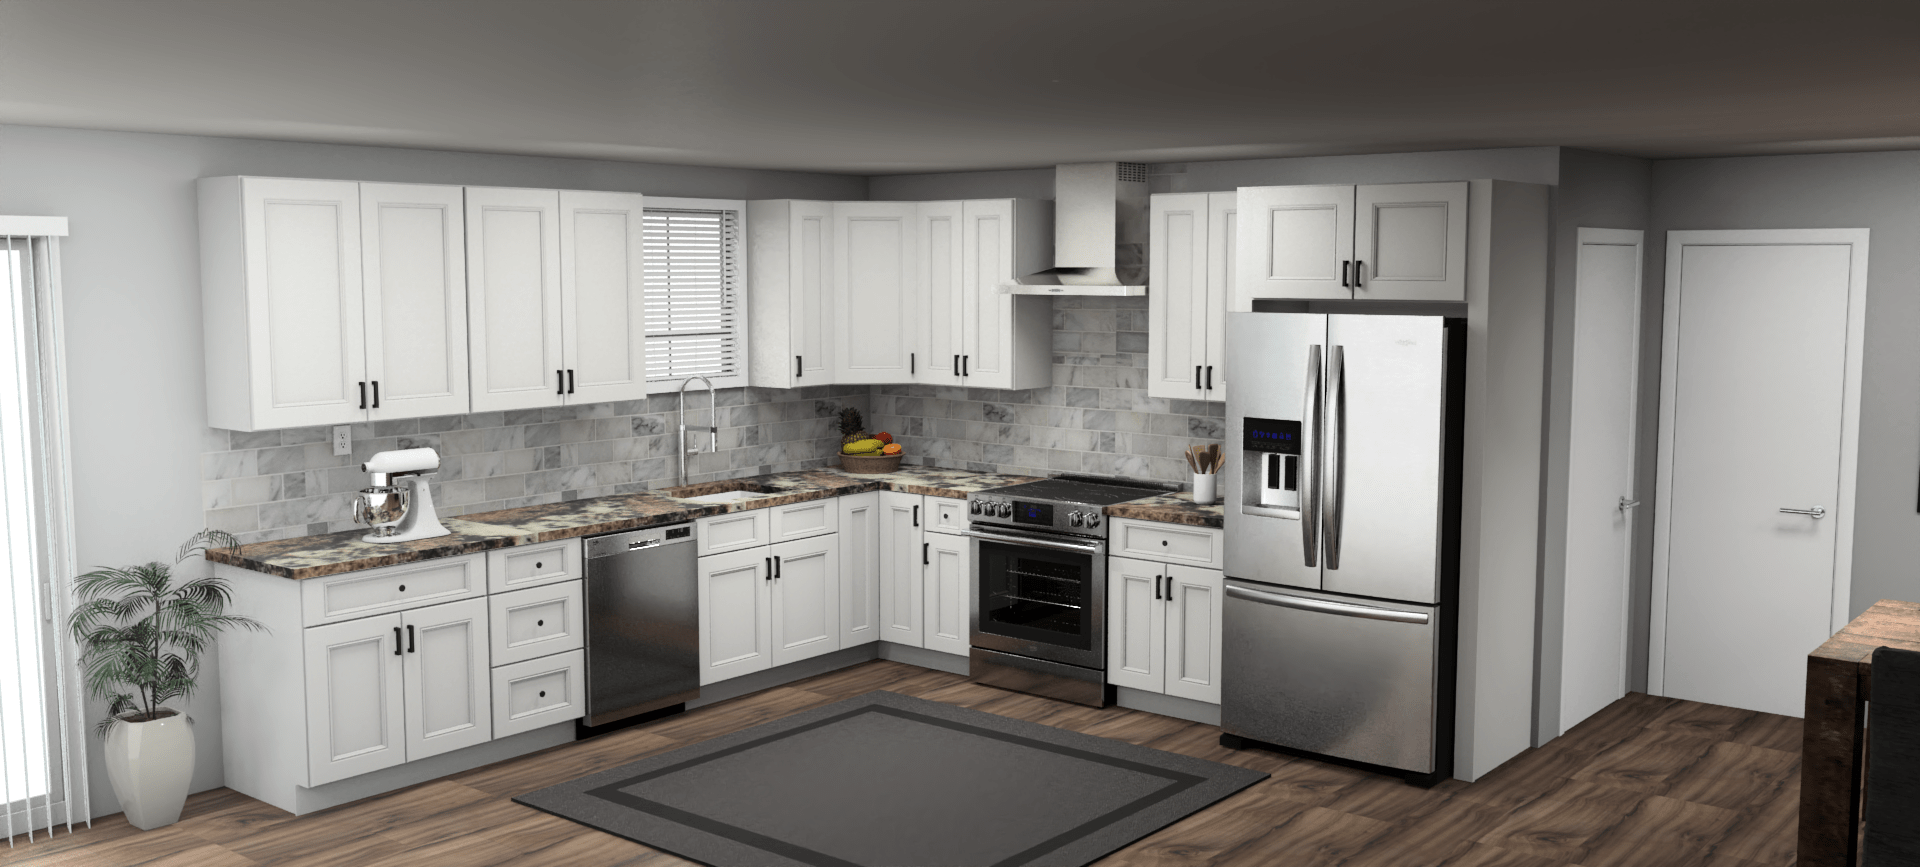 Fabuwood Allure Nexus Frost 12 x 12 L Shaped Kitchen Main Layout Photo